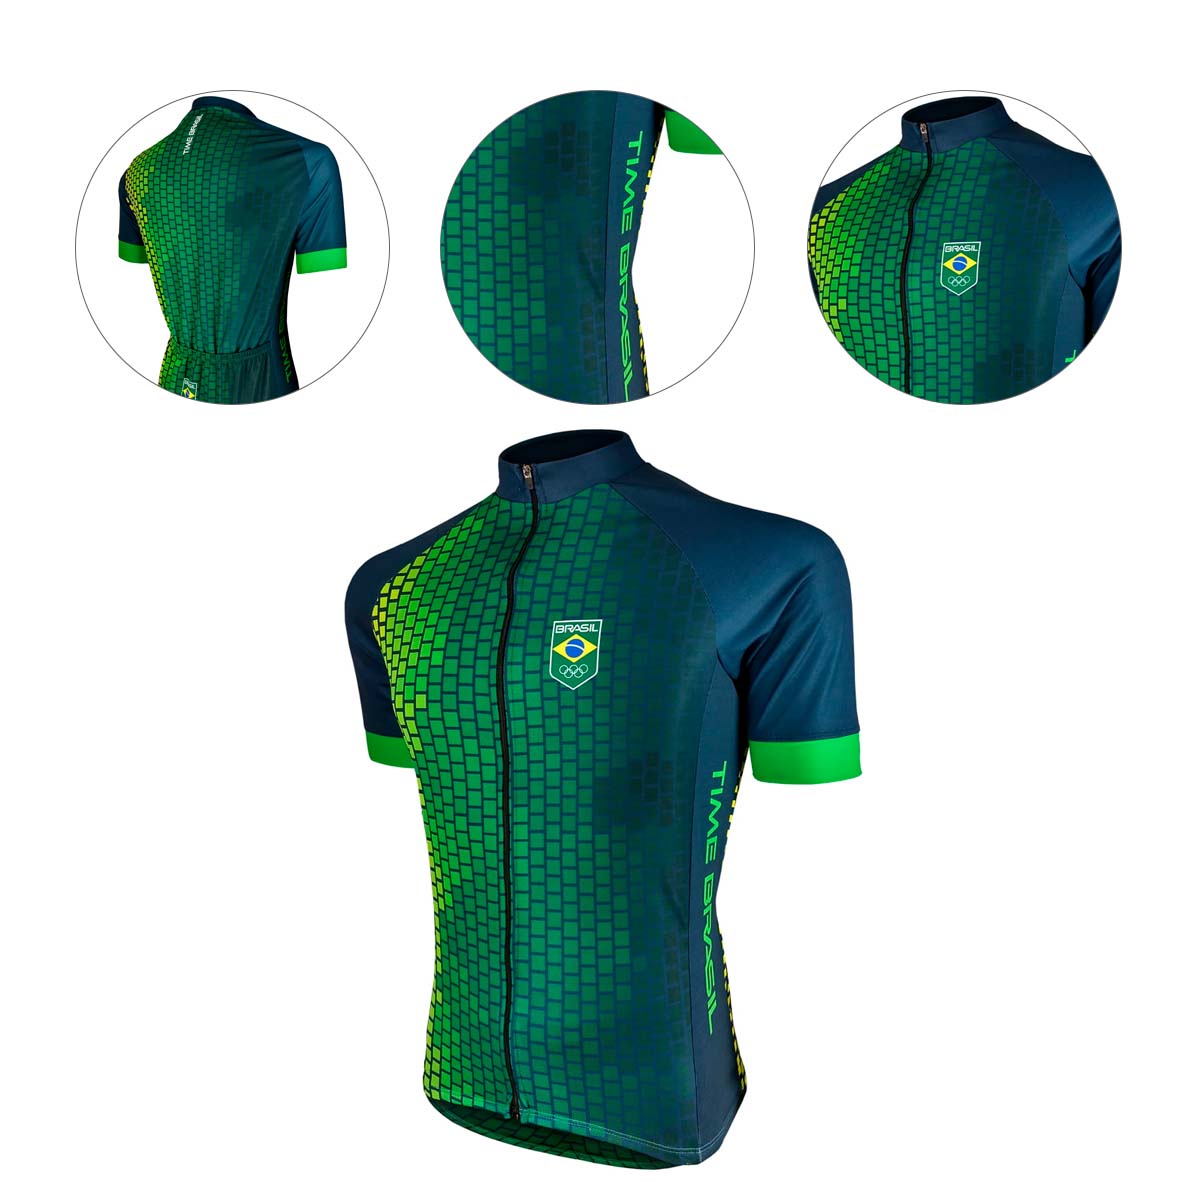 Camisa Barbedo Brasil Podium Raglan Verde Ciclismo 22